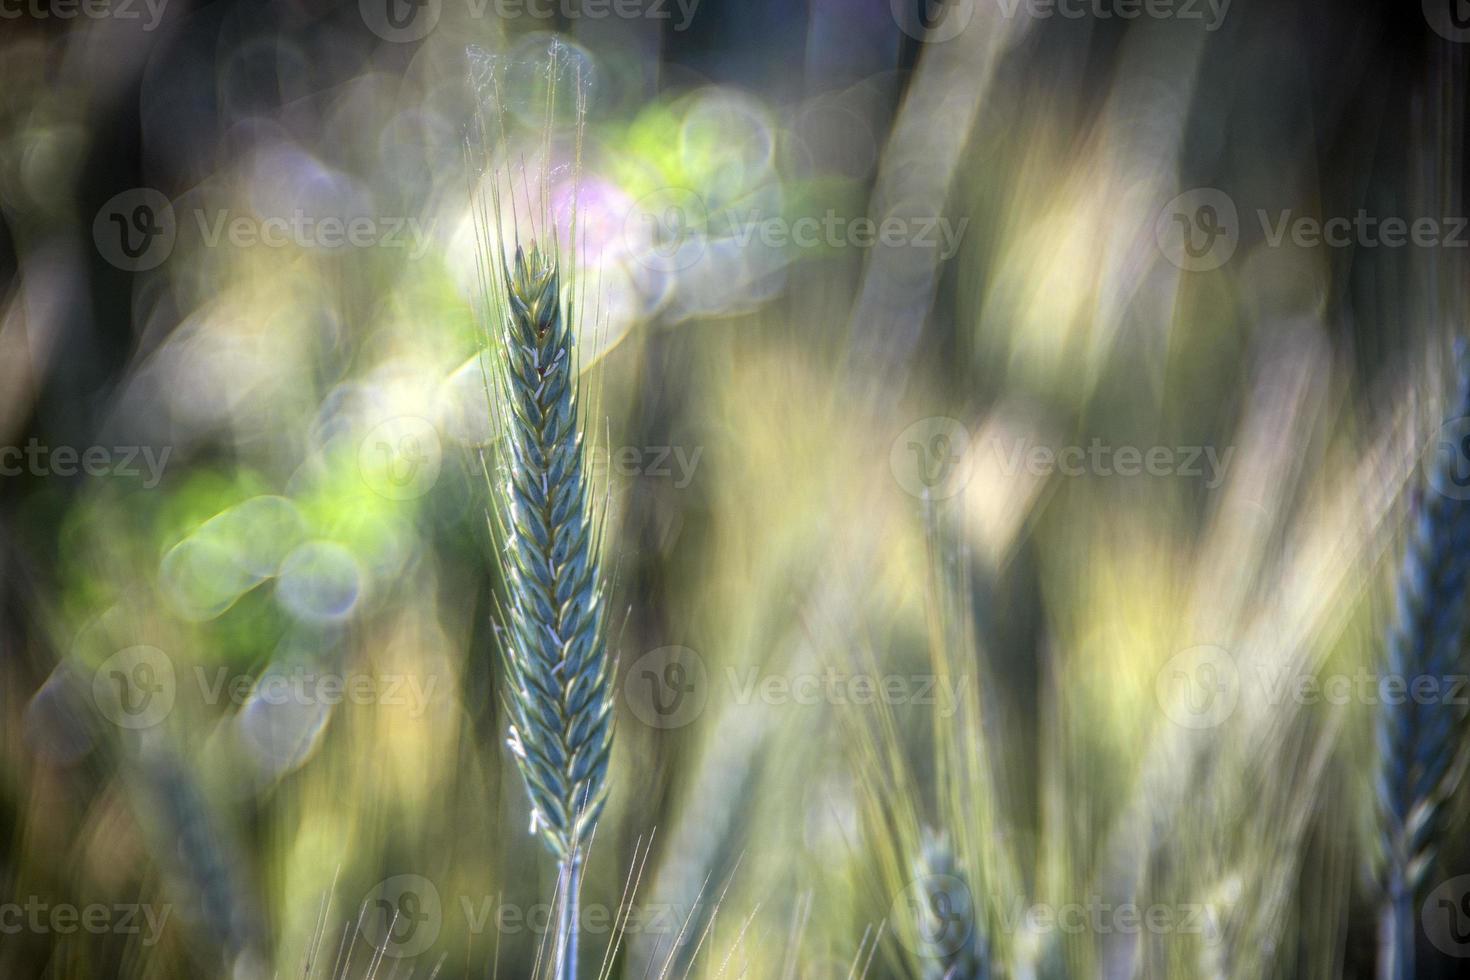 creciente detalle de campo de trigo verde foto